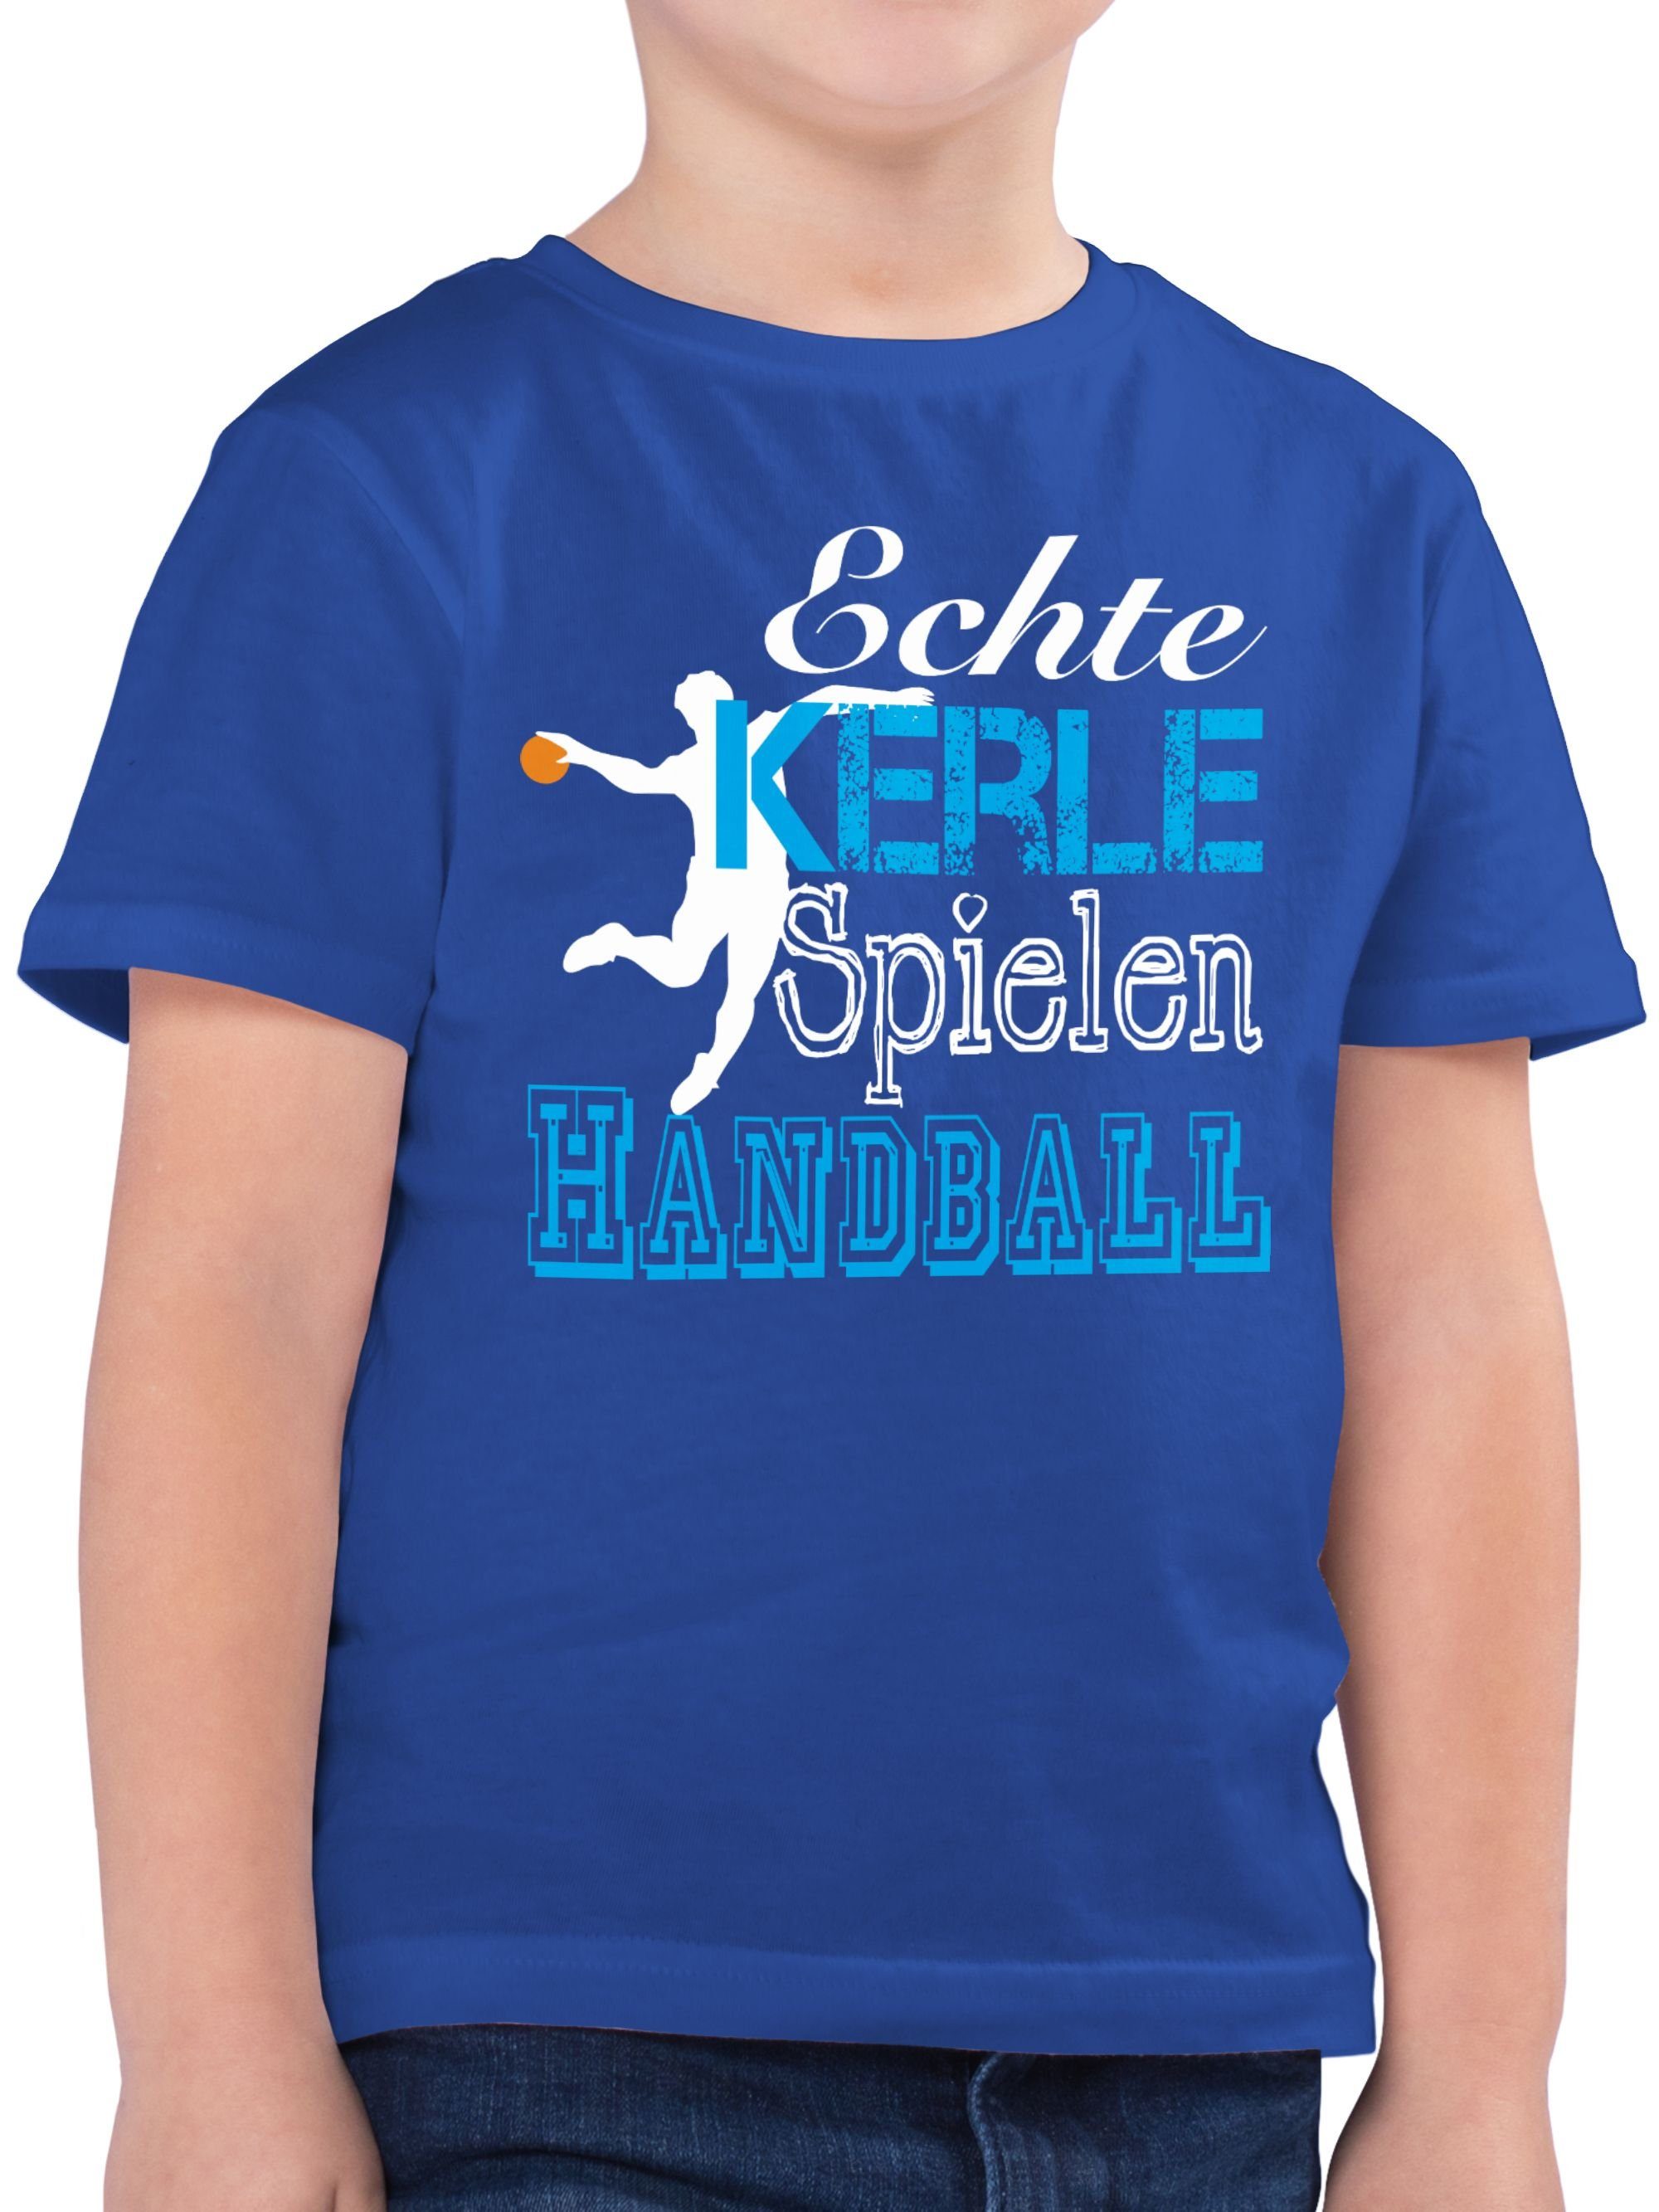 - Kleidung Sport T-Shirt Kinder T-Shirt - Handball Sportkleidung weiß Shirtracer Kinder Echte Zubehör Jungen Kerle Spielen